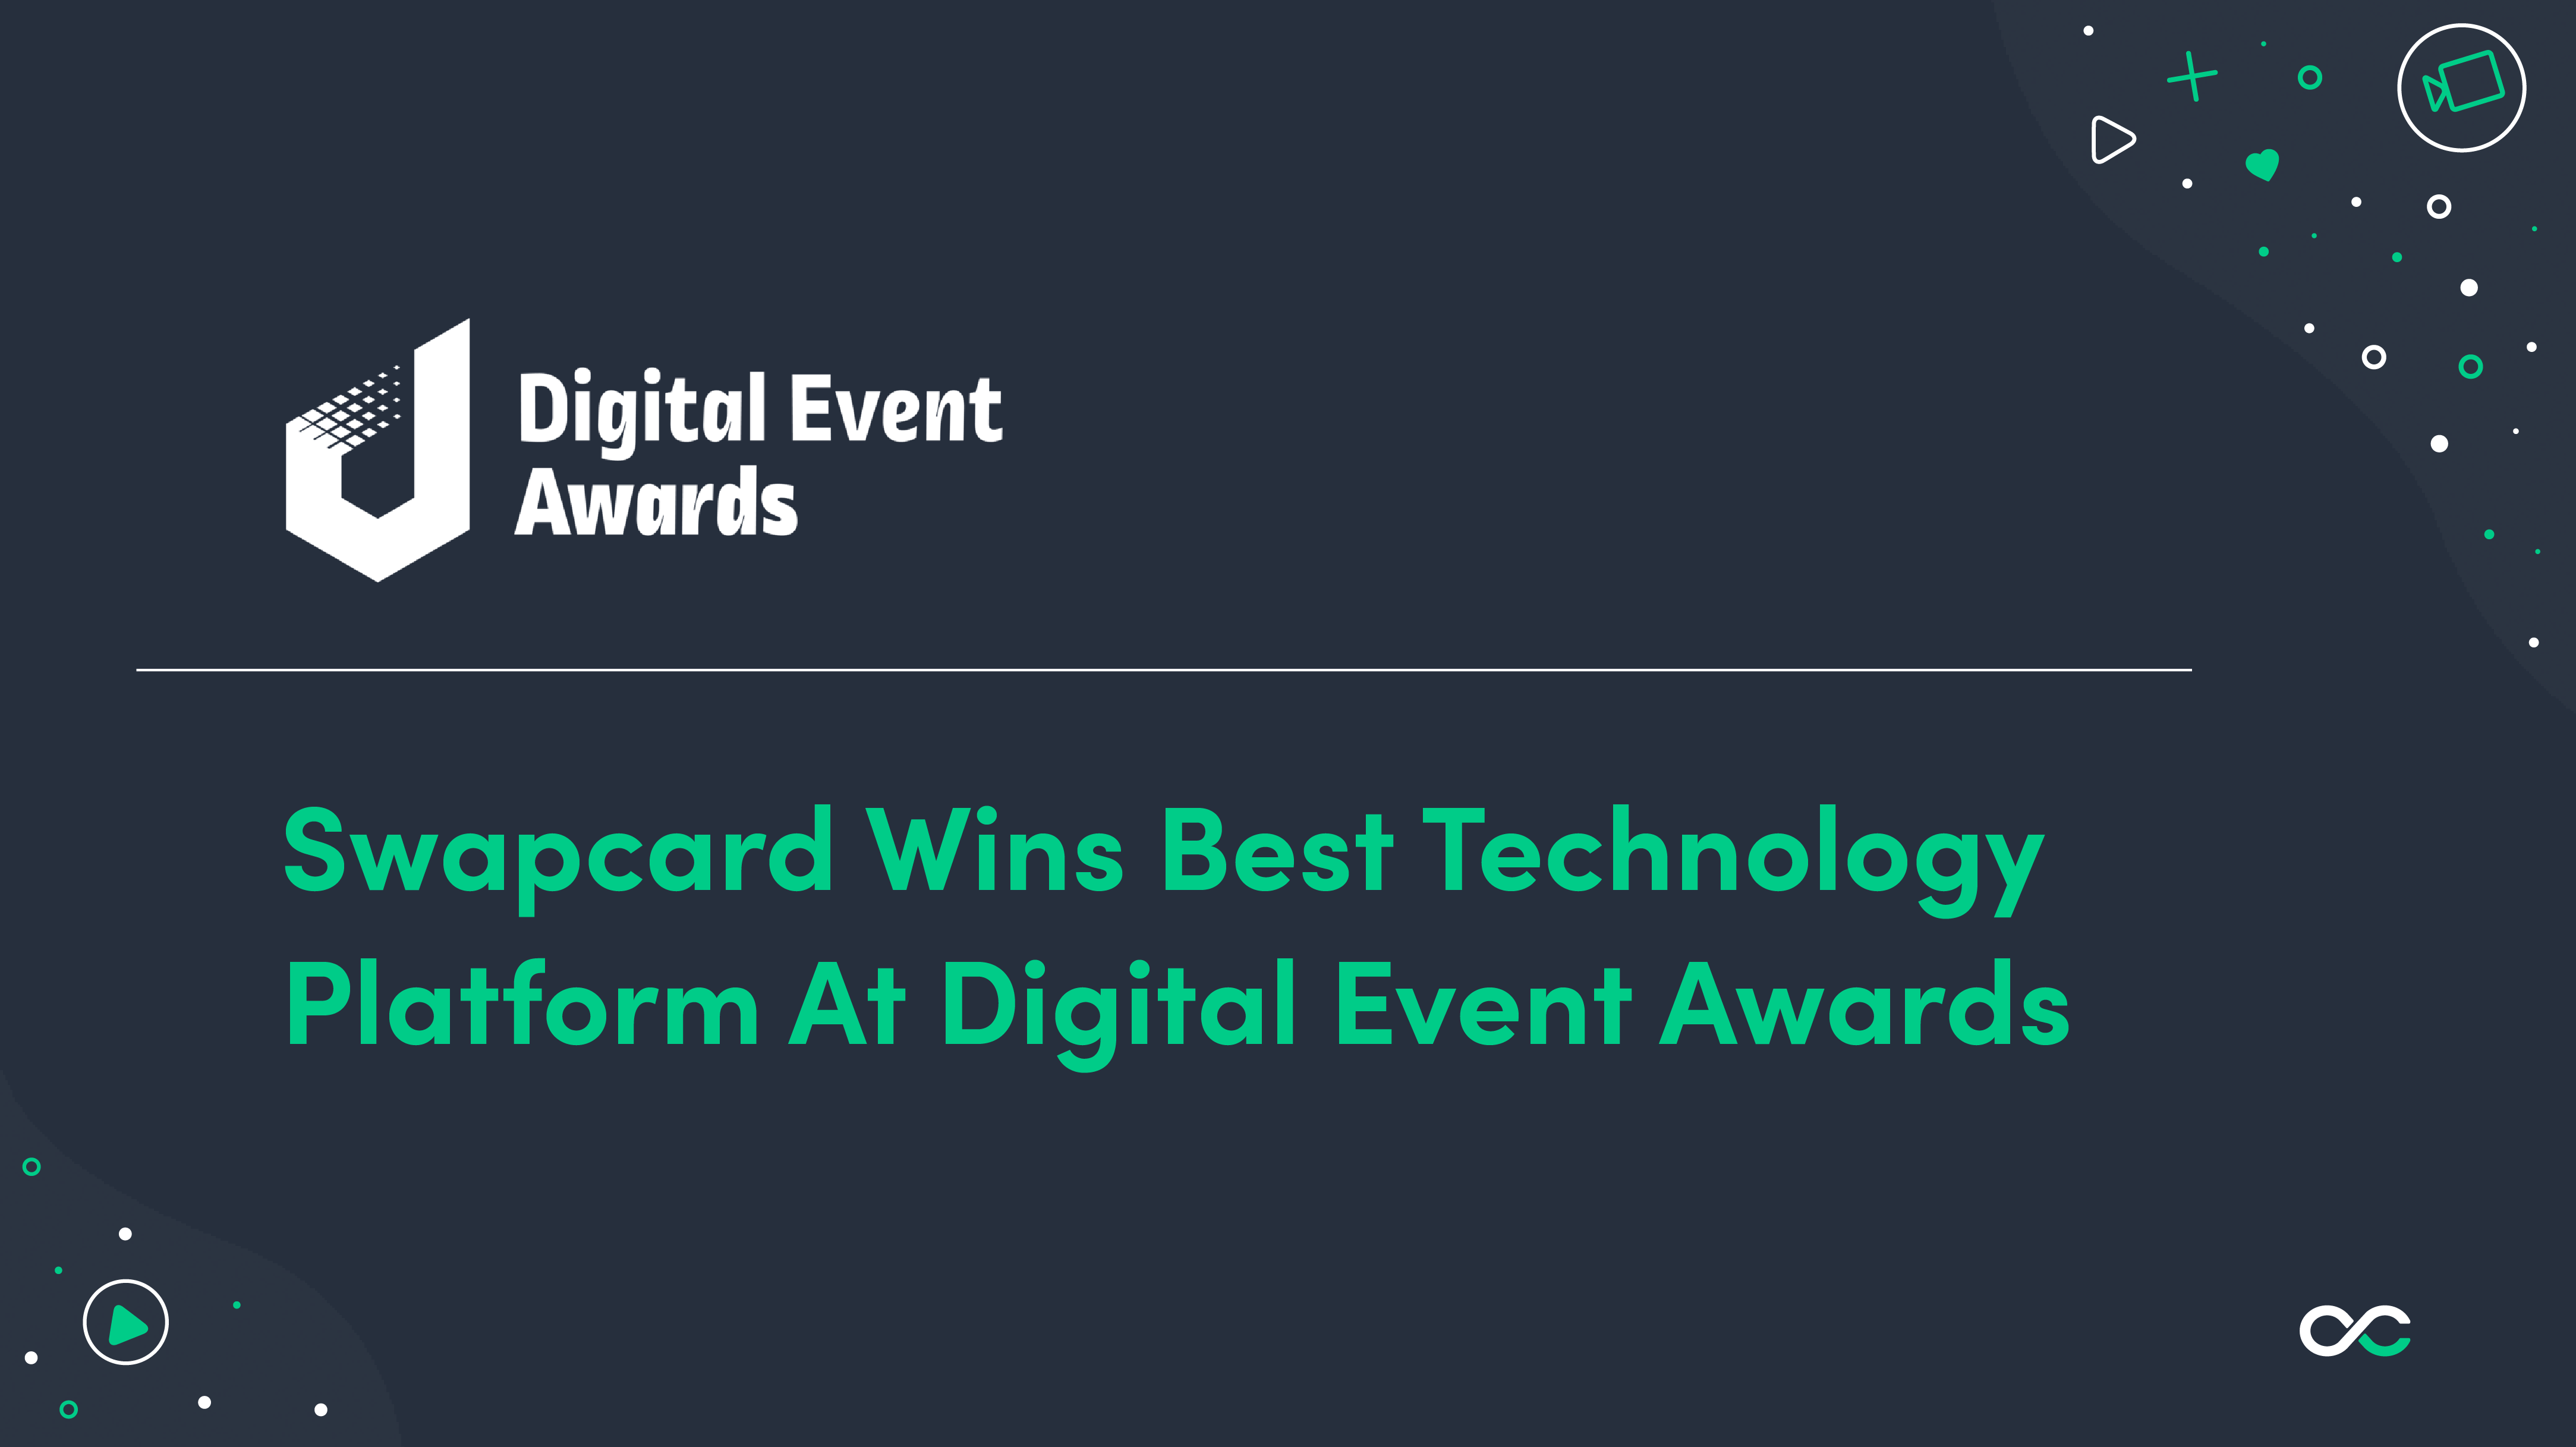 Swapcard Wins Best Technology Platform At Digital Event Awards